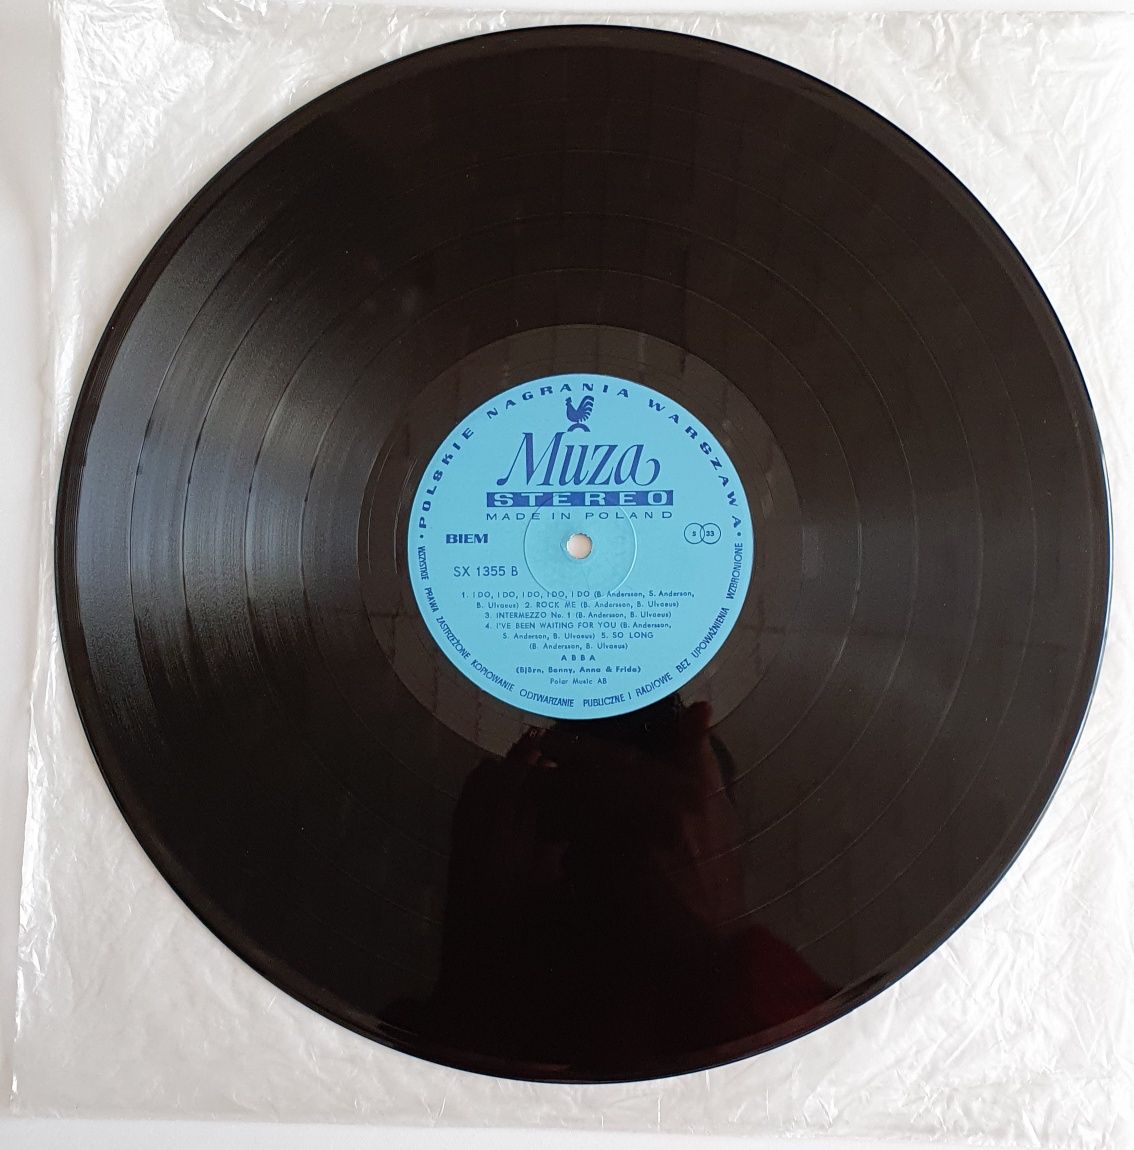 Vinyl - Abba (Bjorn Benny Anna Frida)